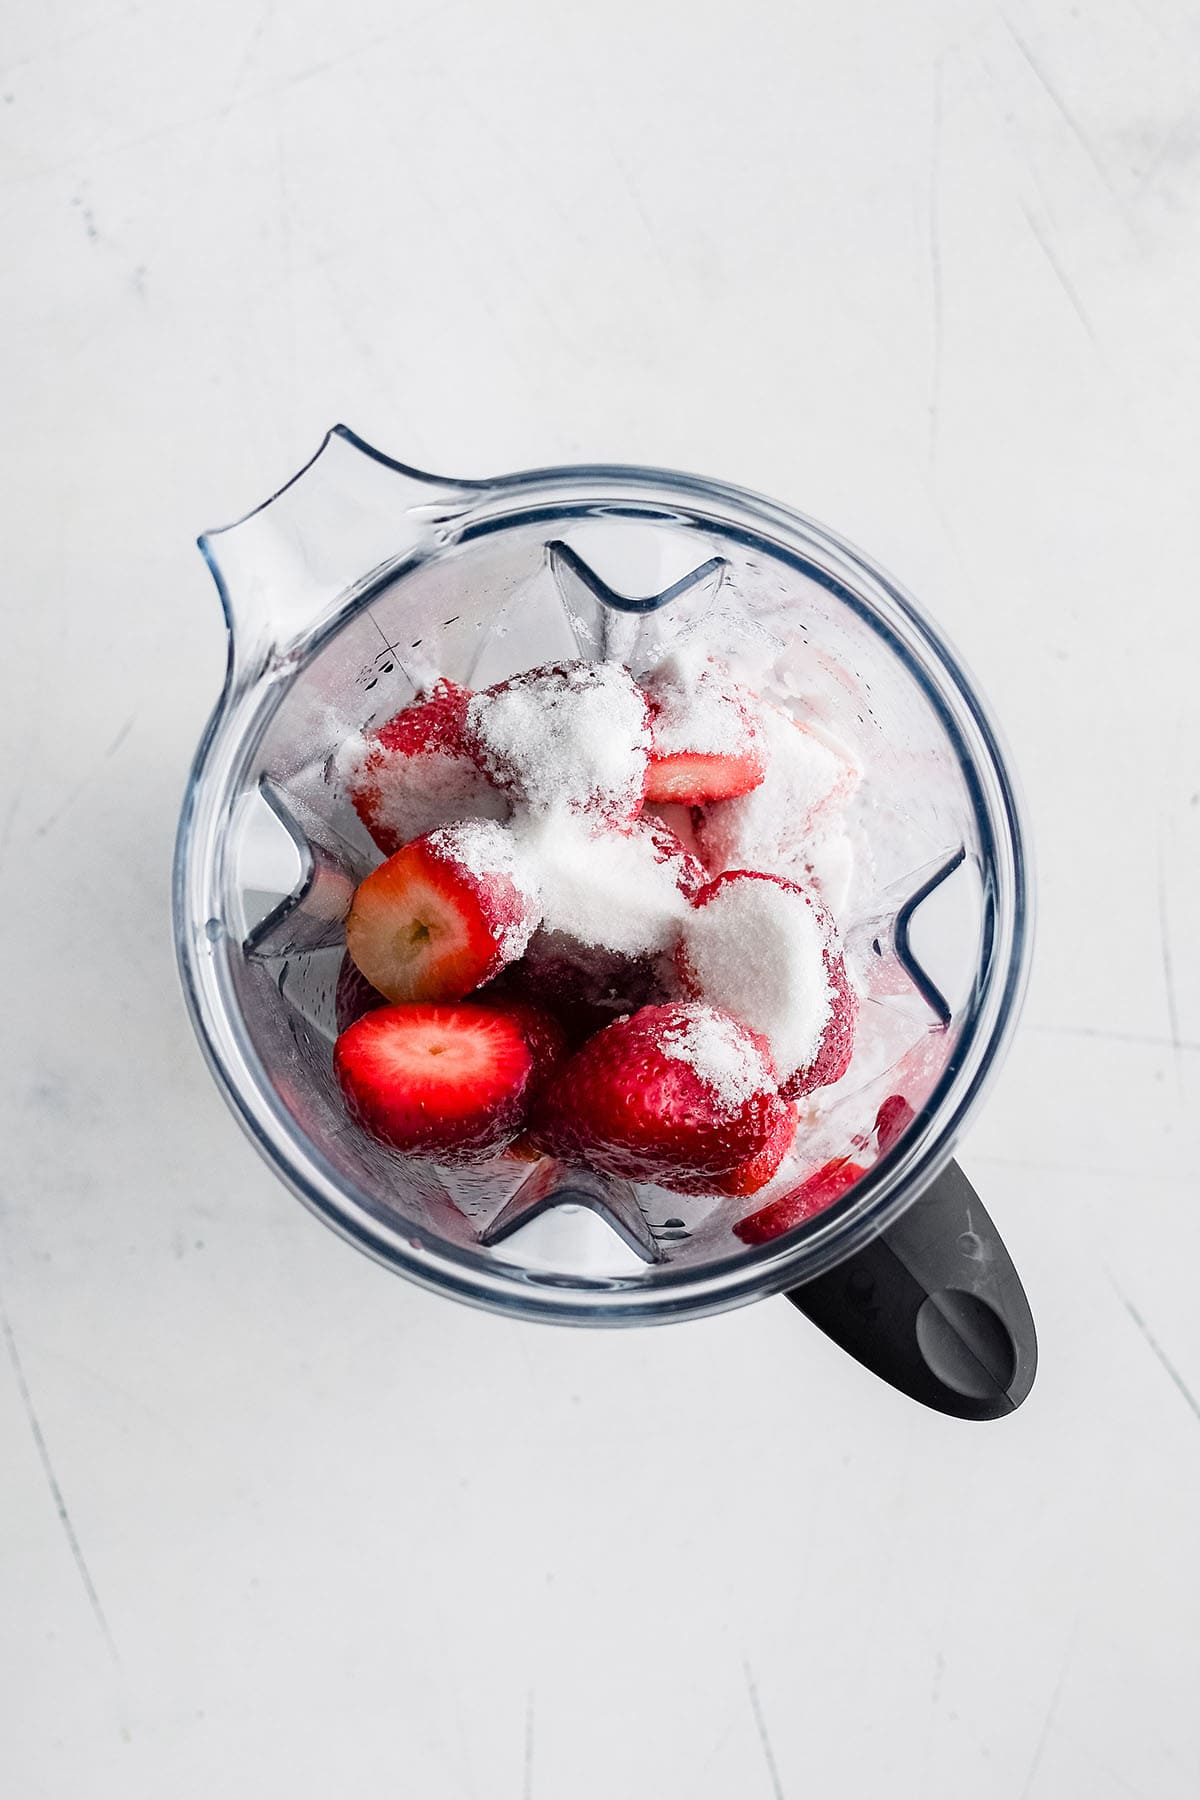 ingredients to make strawberry lemonade in a blender